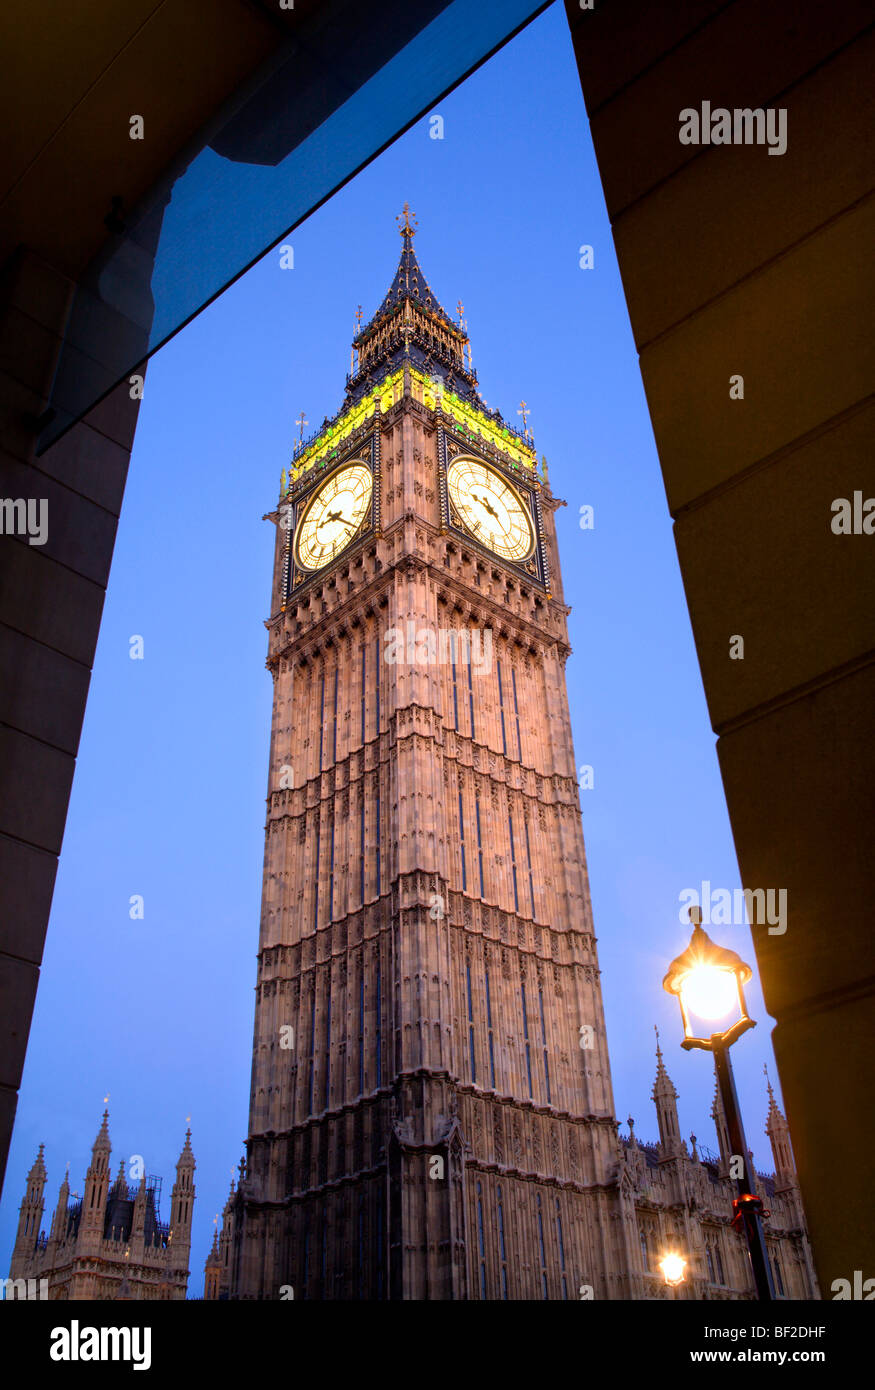 London - Big ben in evening Stock Photo